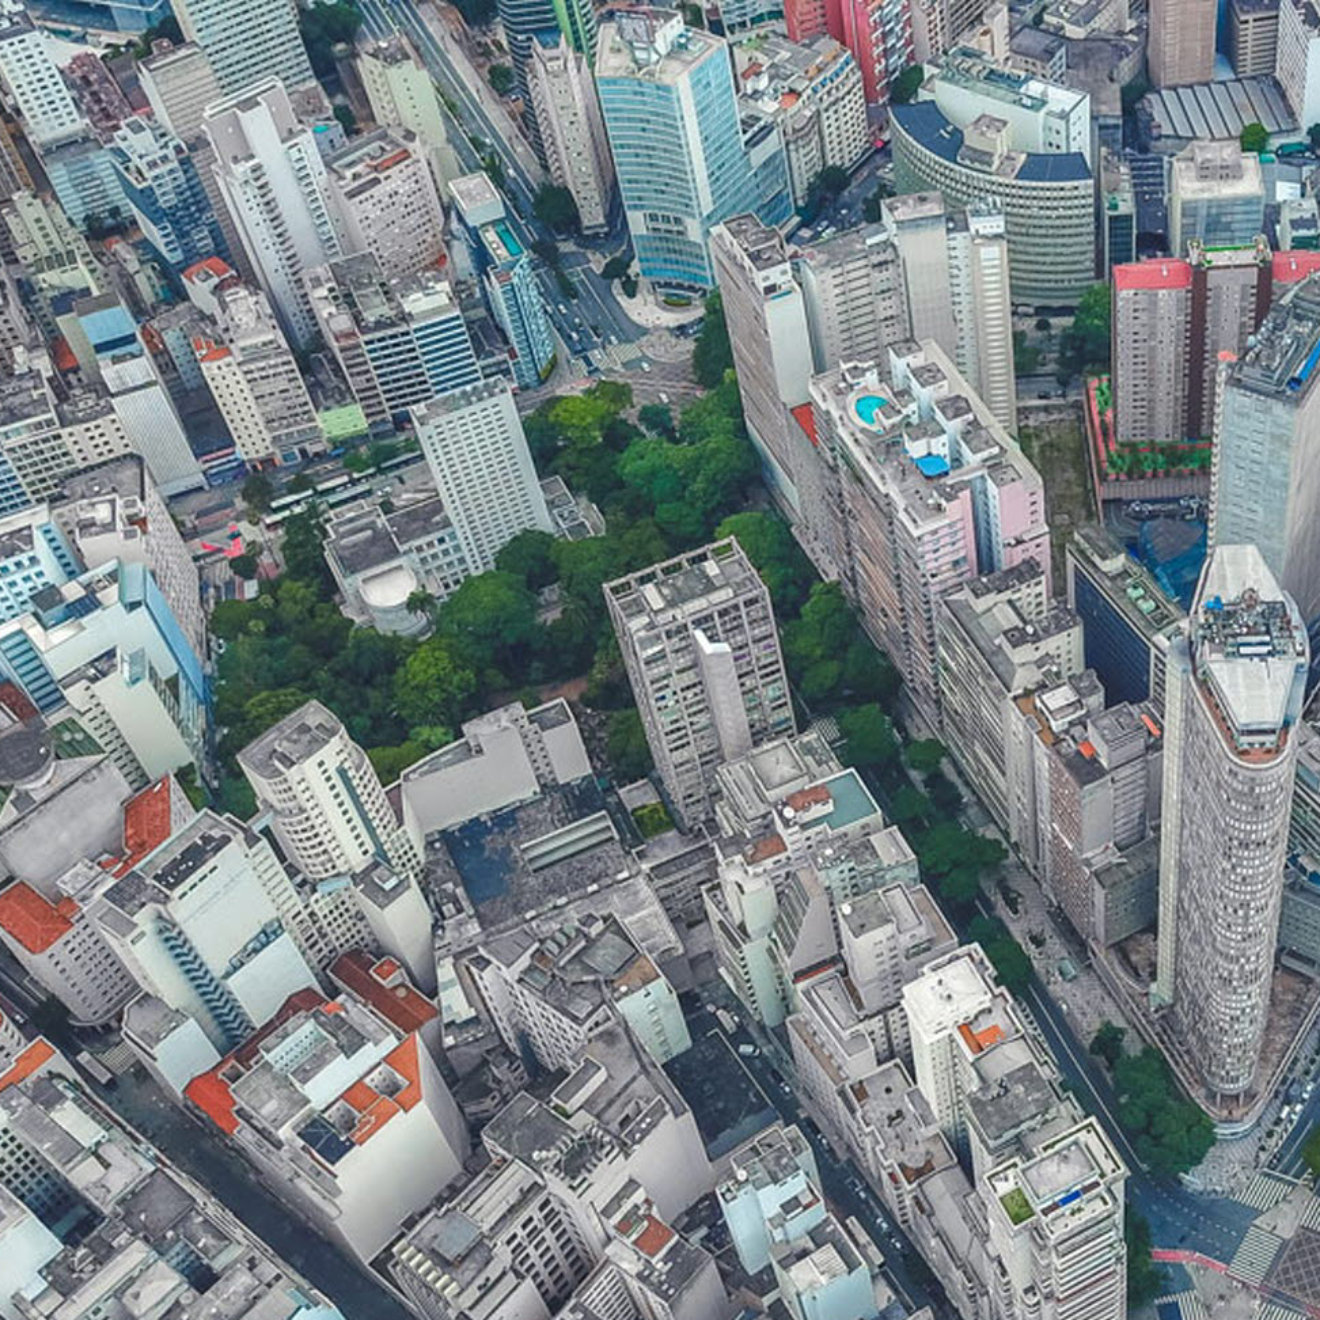 A birdseye view of multi-storey residential buildings in an urban area